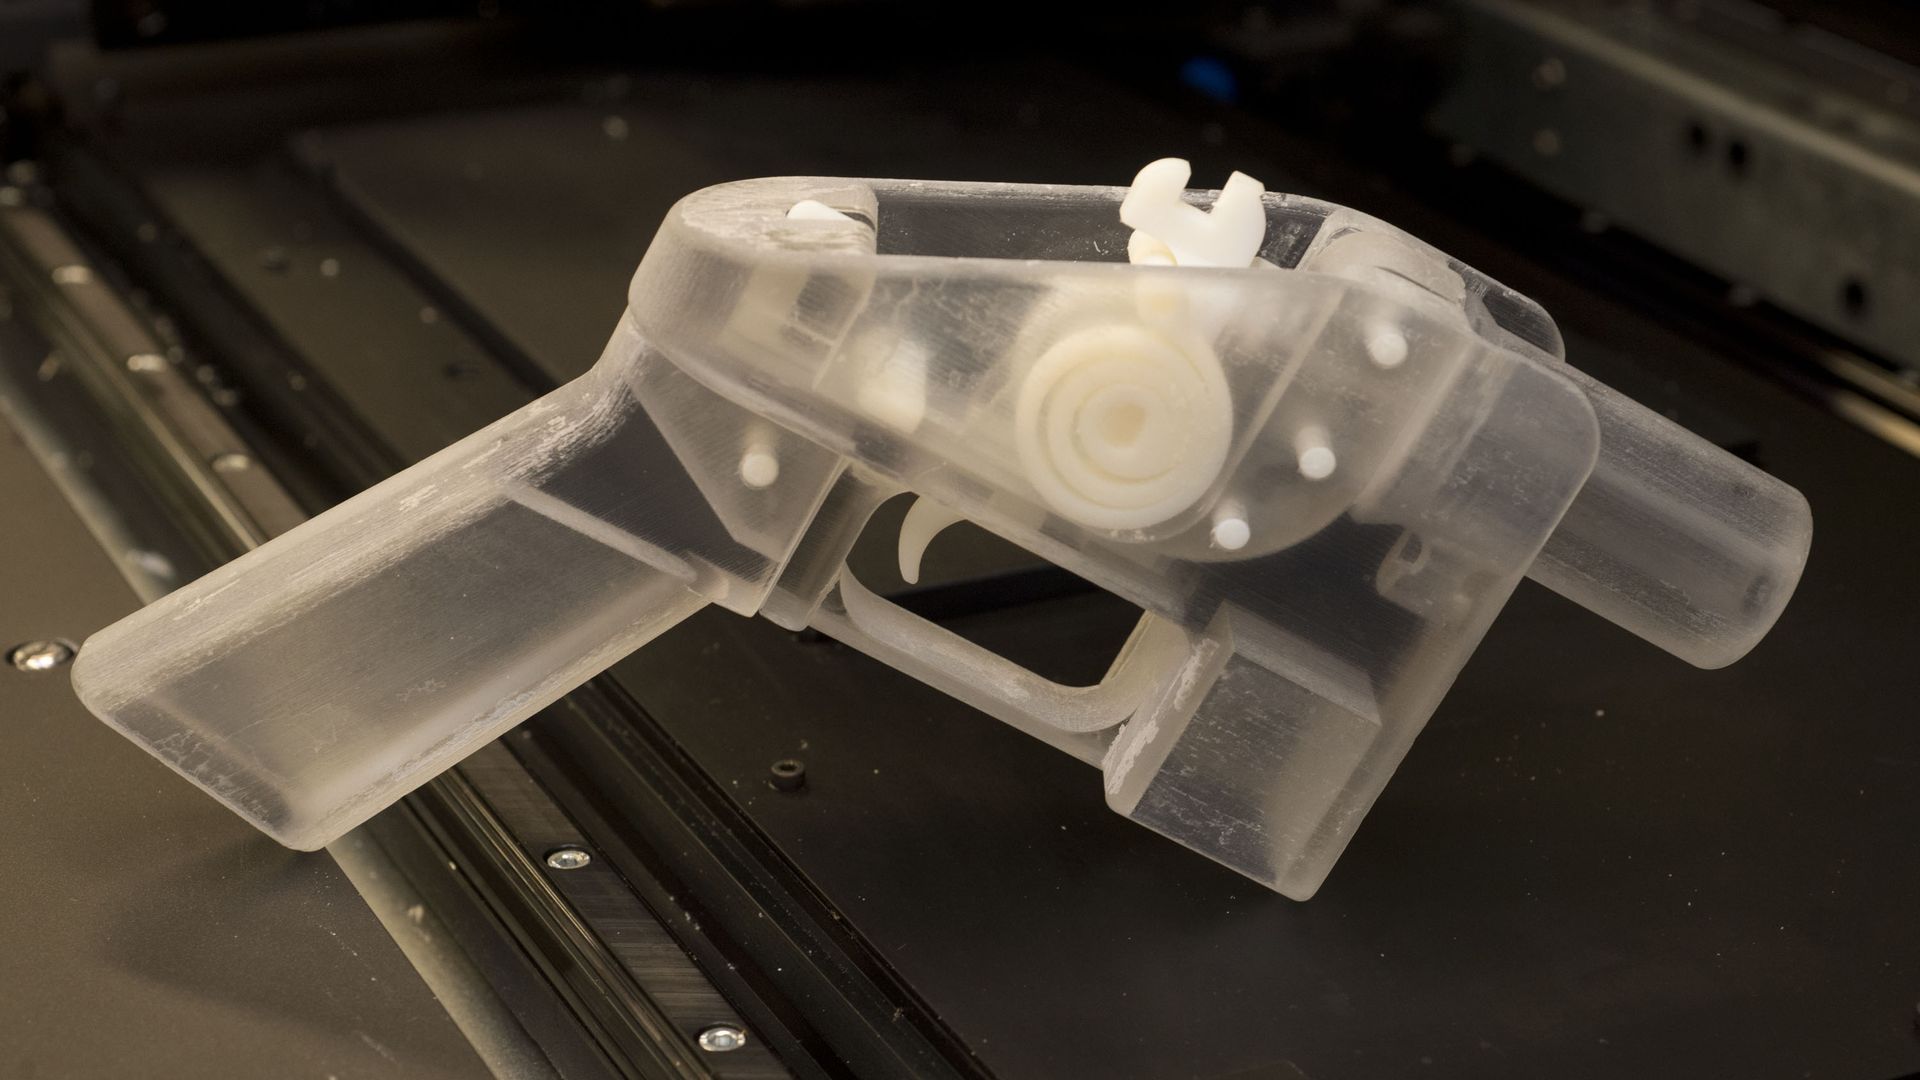 Daniel Southwick shows off a gun made by a 3D printer. Photo: Keith Beaty/Toronto Star via Getty Images